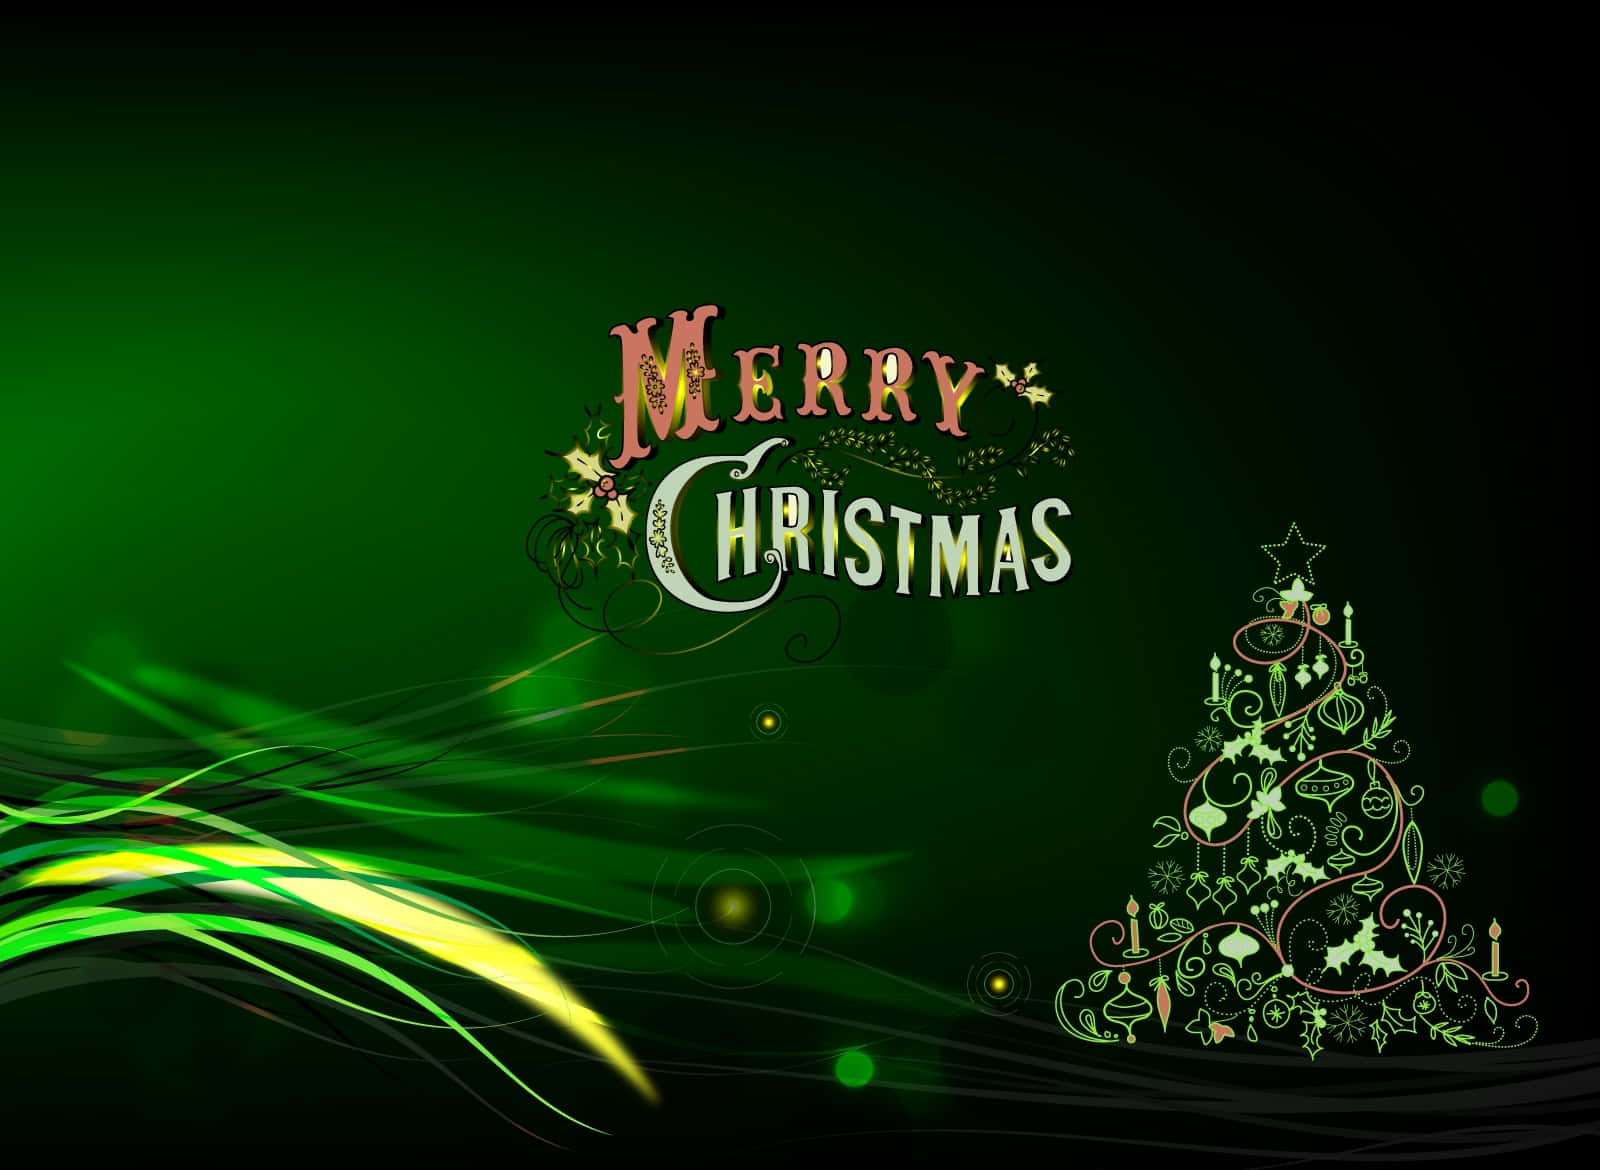 Spread the joy of Dark Green Christmas Wallpaper